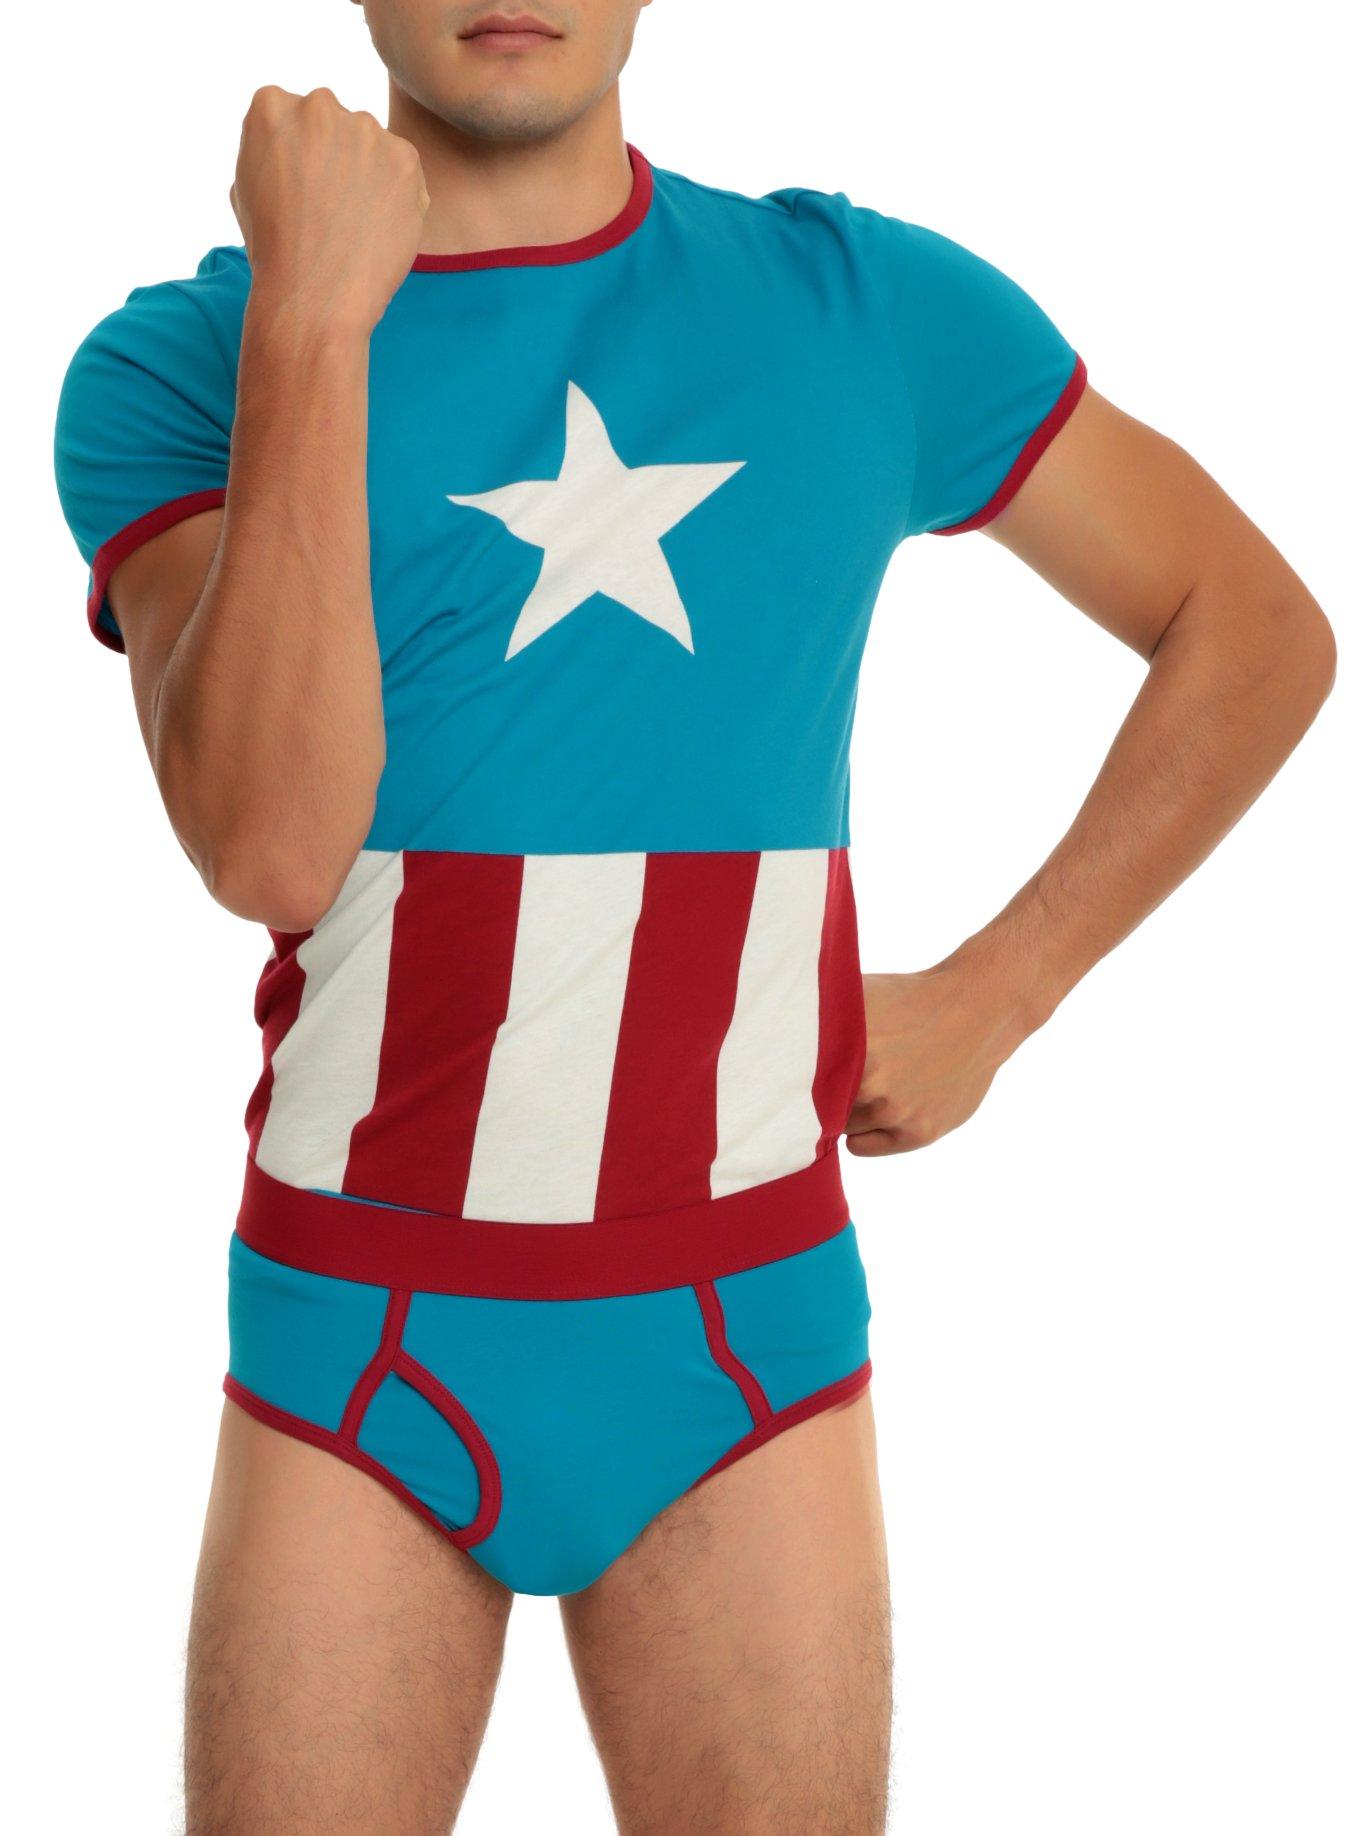 Underoos Marvel Captain America Guys Underwear Set